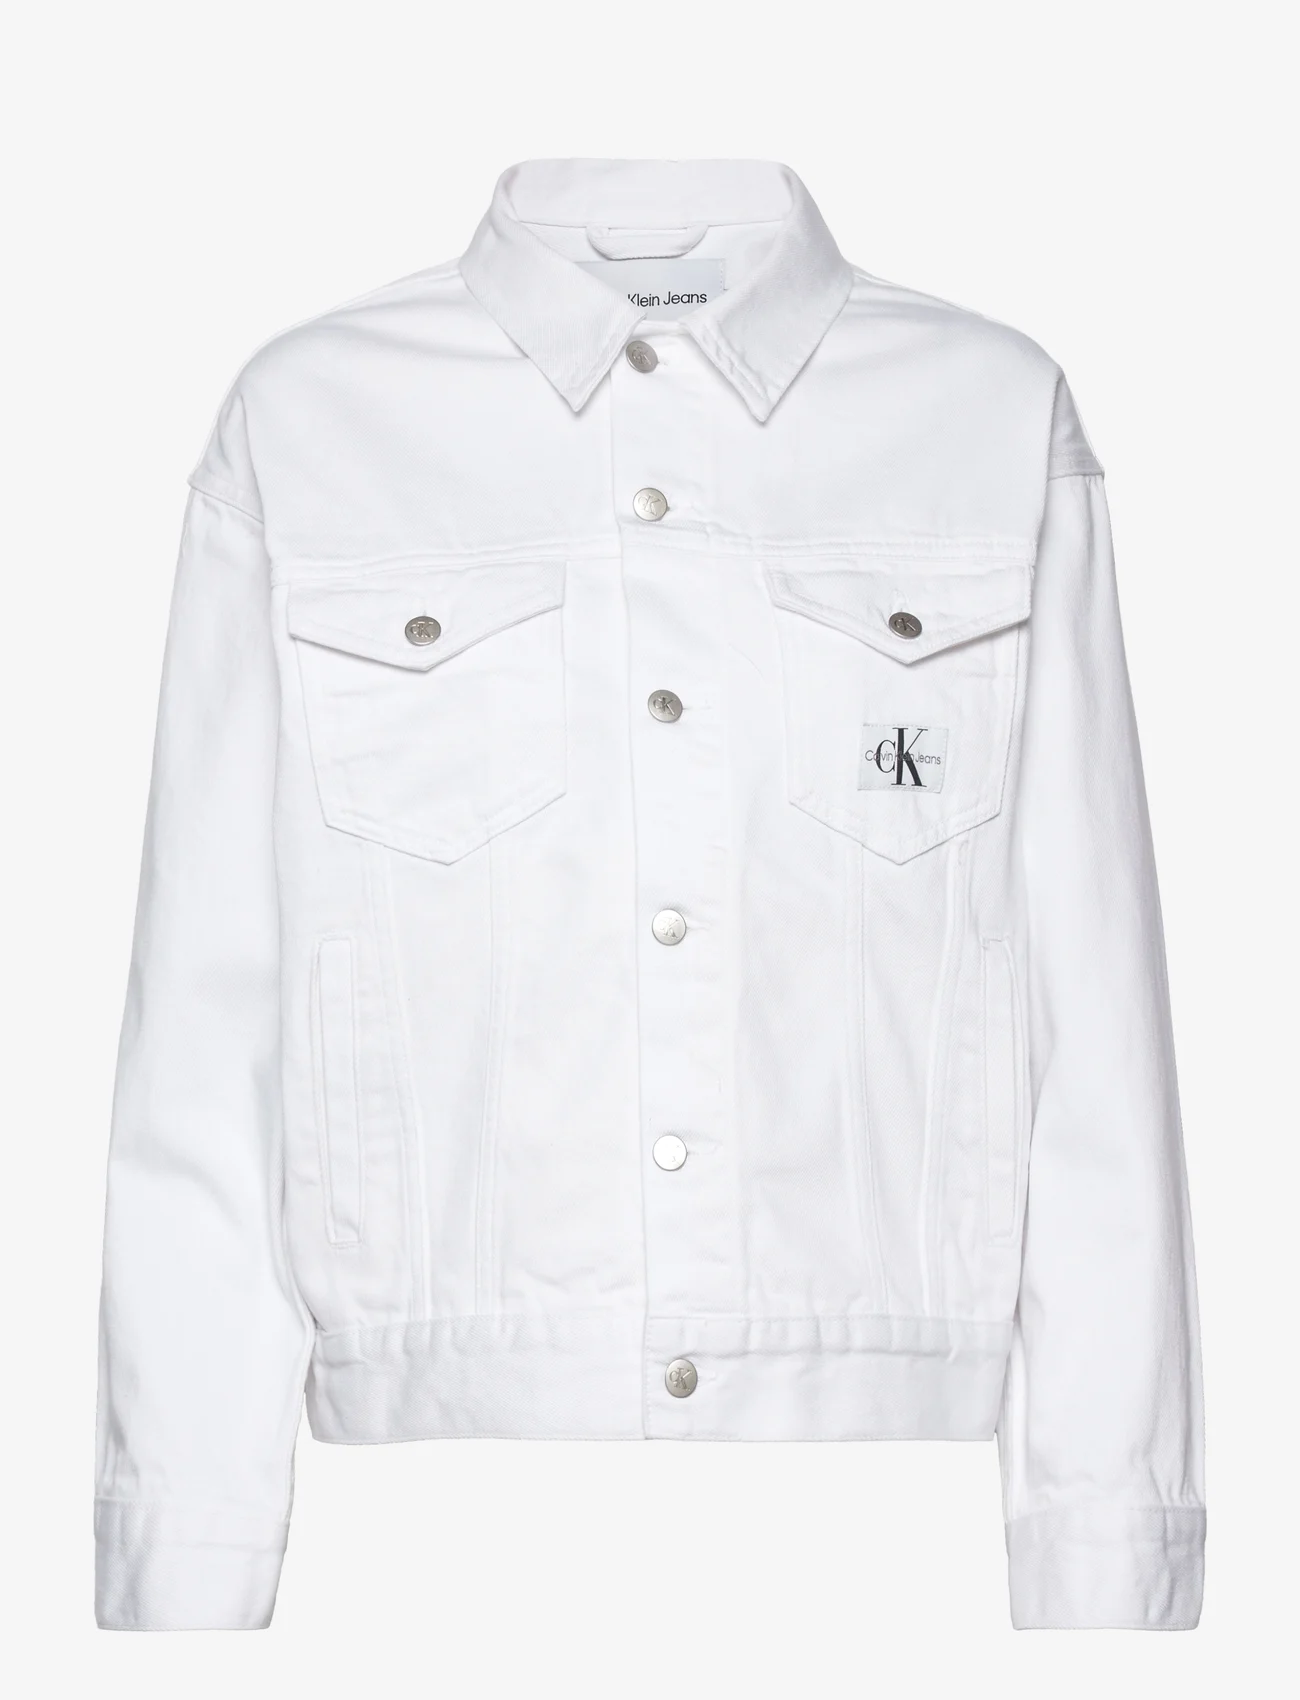 Calvin Klein Jeans Dad Denim Jacket  €. Buy Denim jackets from Calvin  Klein Jeans online at . Fast delivery and easy returns